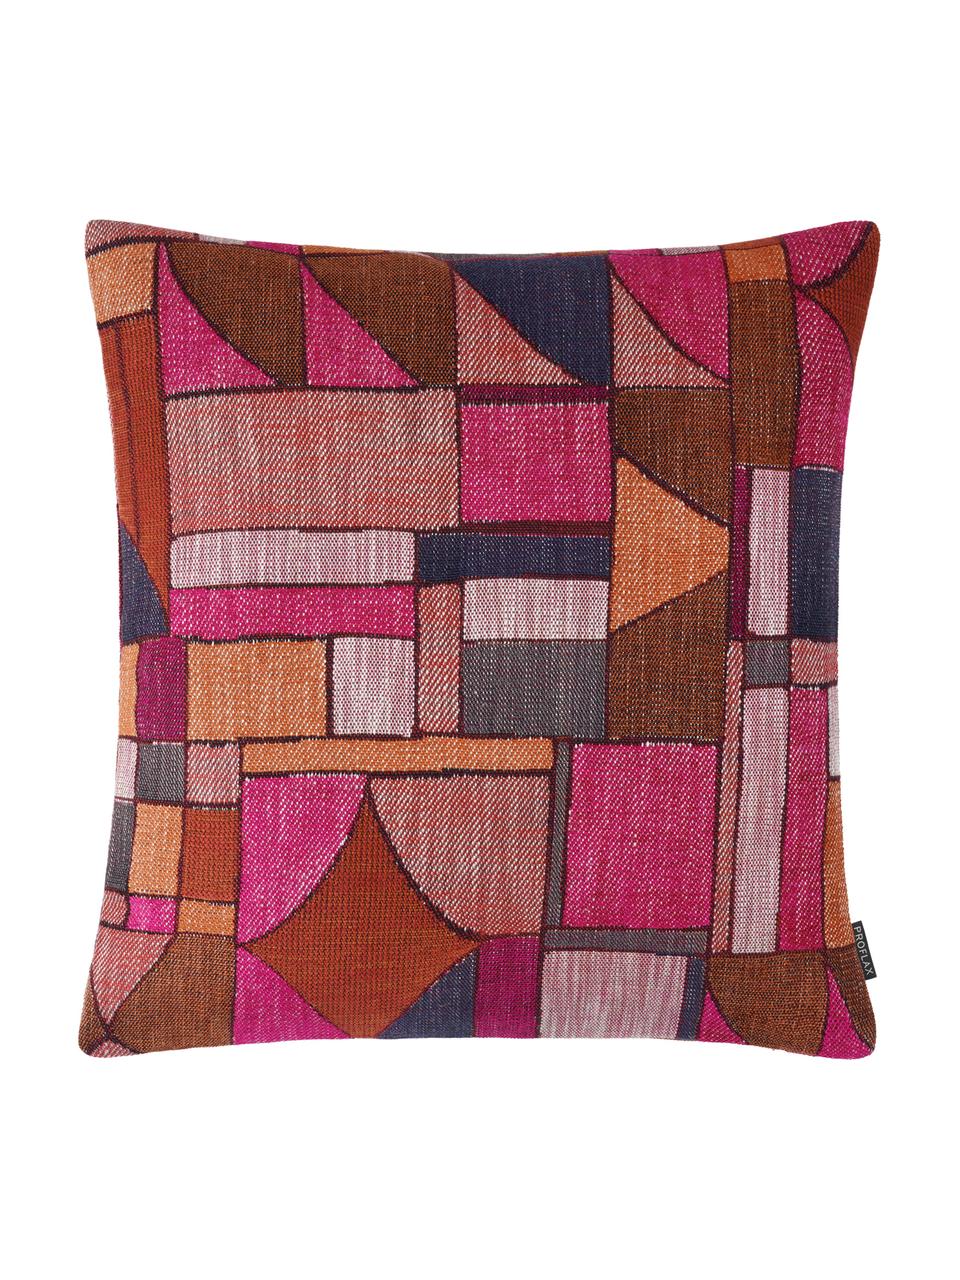 Kussenhoes Morris met abstract patroon, 64% viscose, 19% katoen, 11% linnen, 6% polyester, Roze, multicolour, 40 x 40 cm